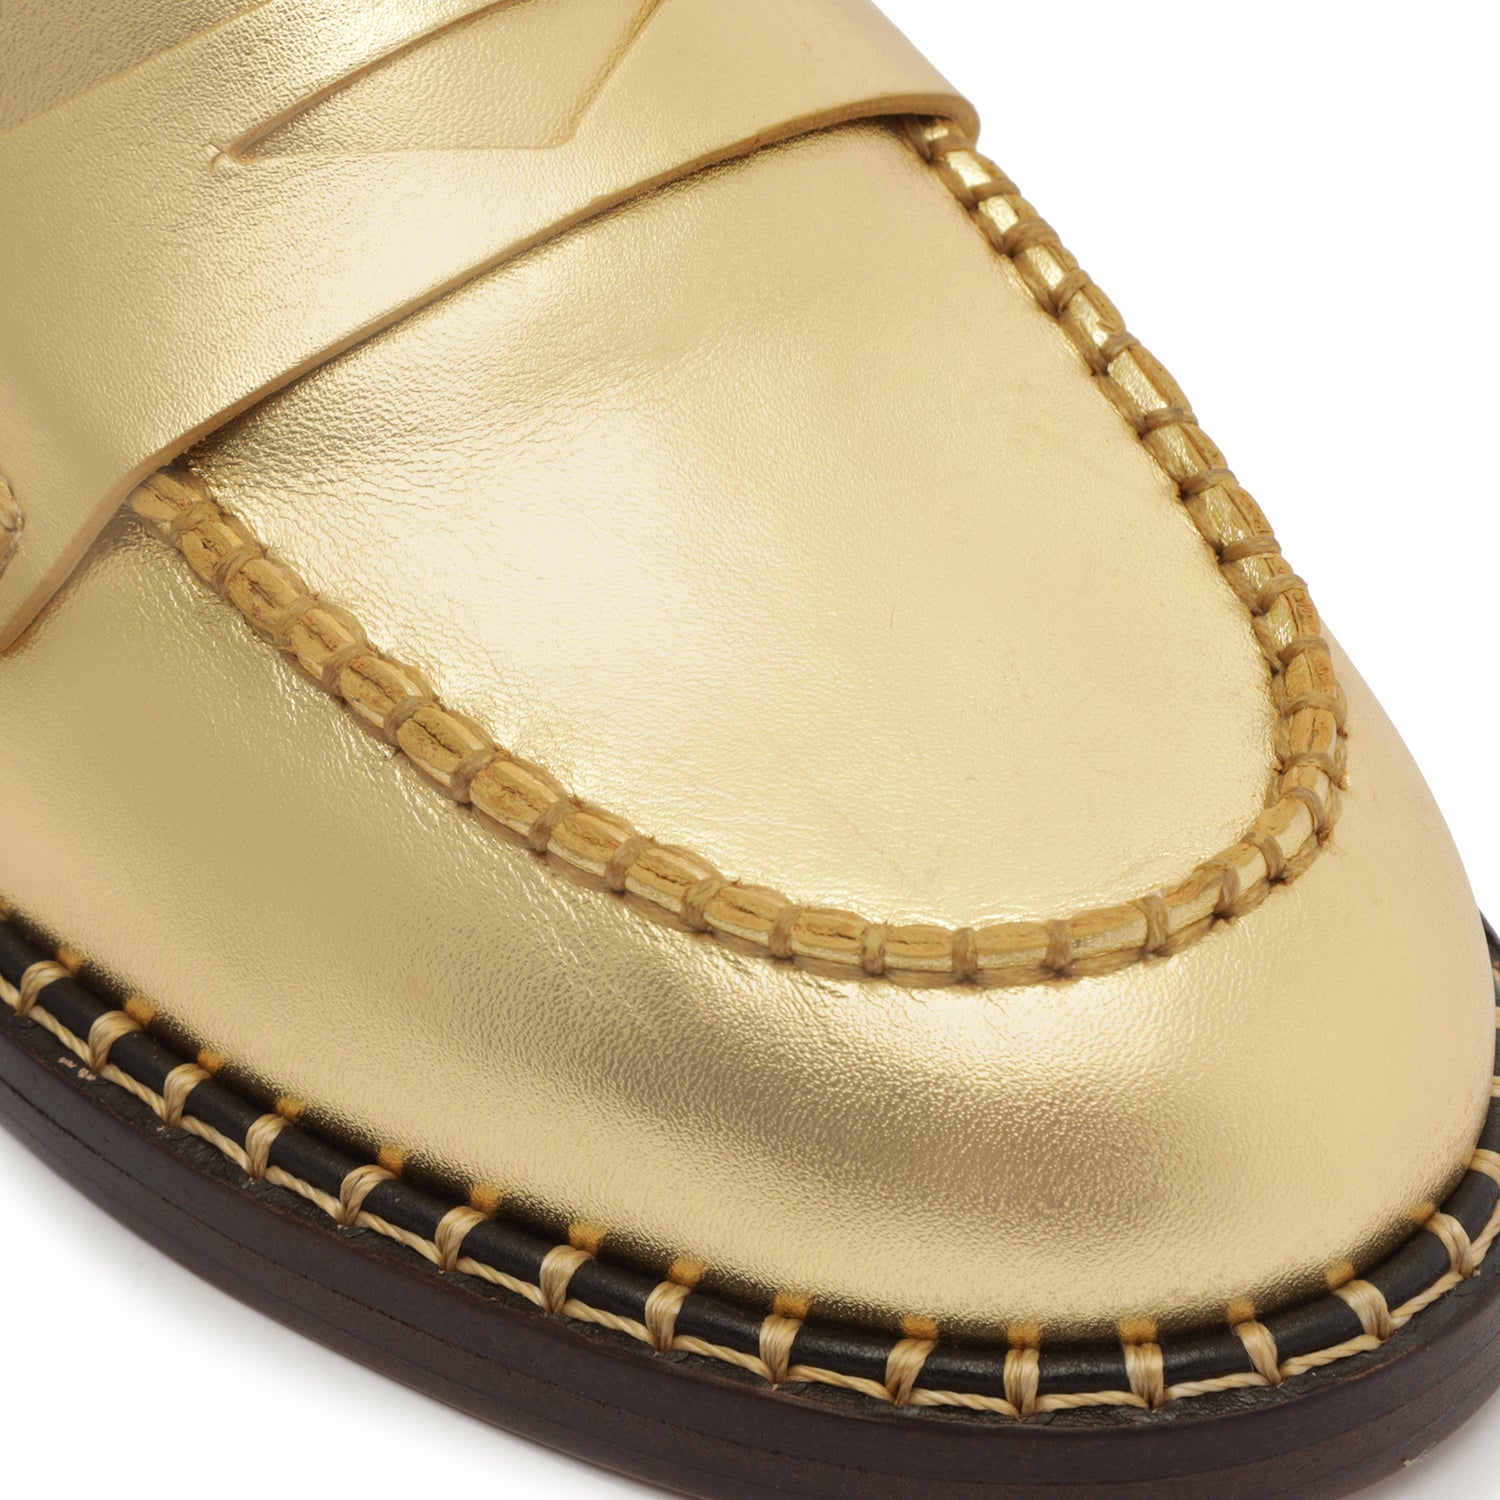 Christie Metallic Leather Flat Flats Open Stock    - Schutz Shoes